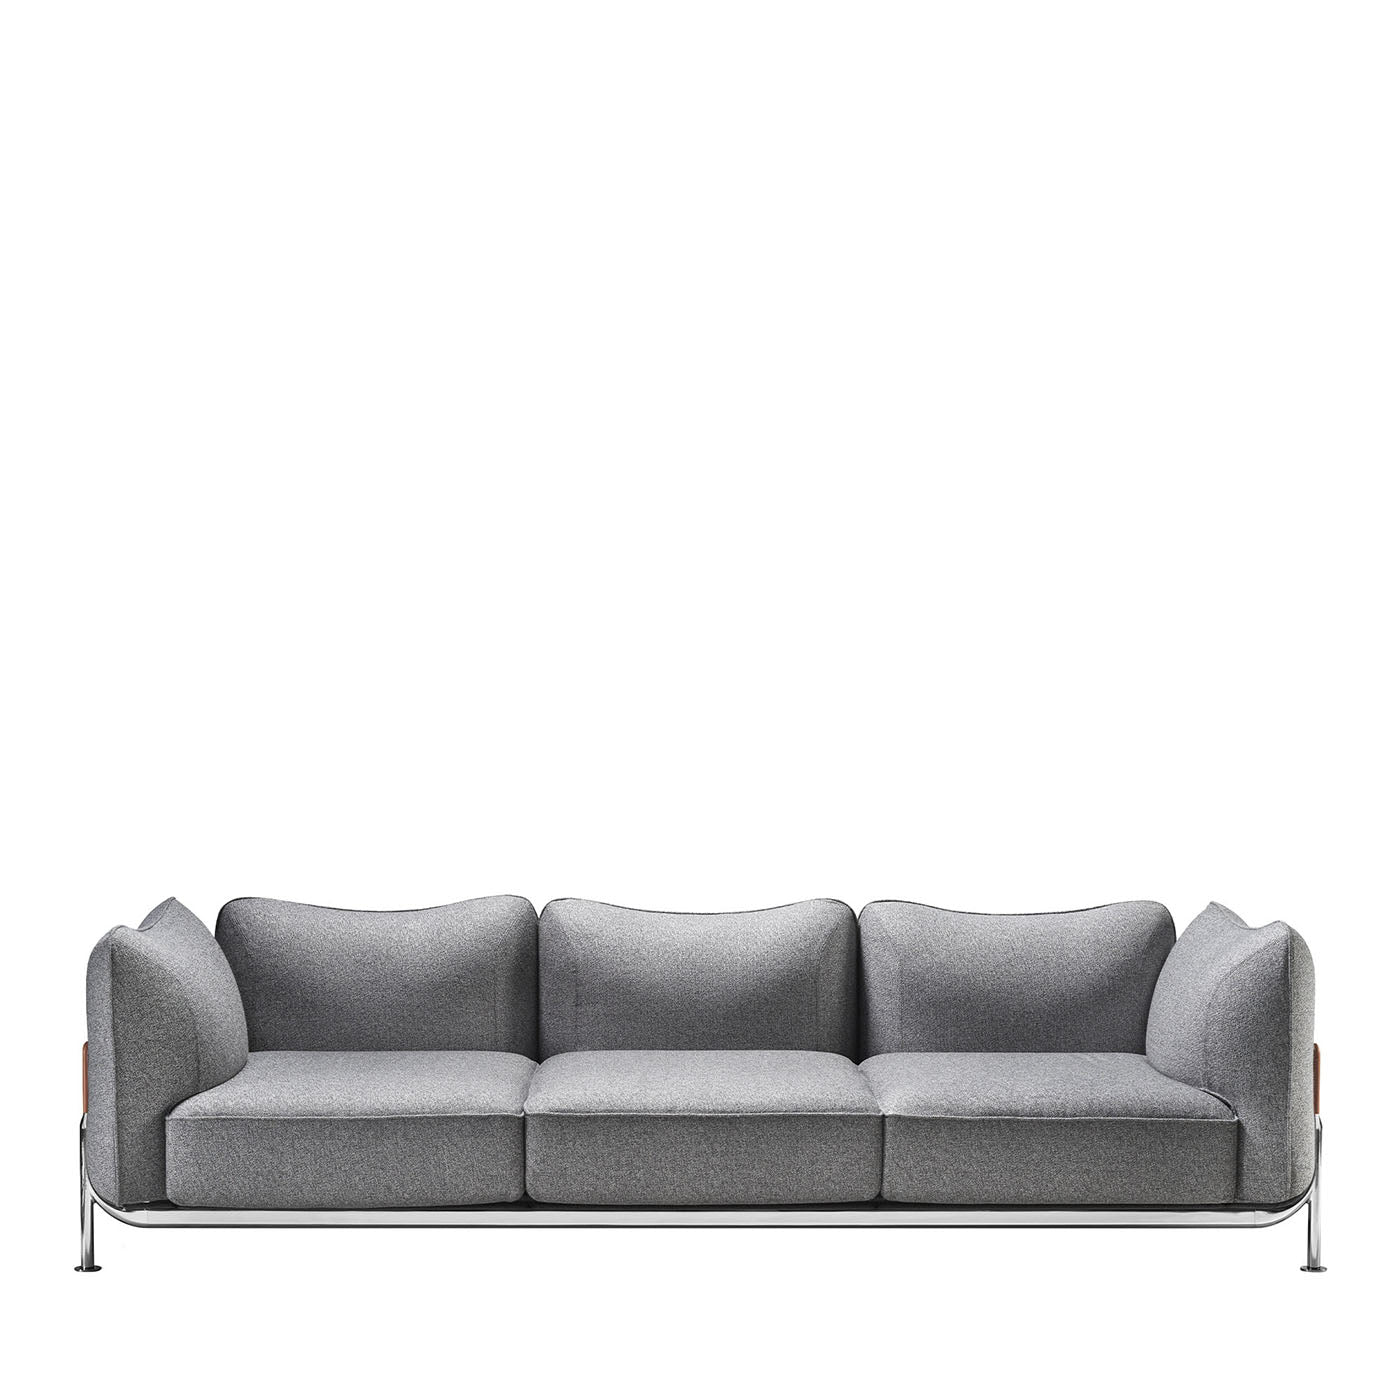 Tasca 3-Seater Gray Fabric Sofa - Main view